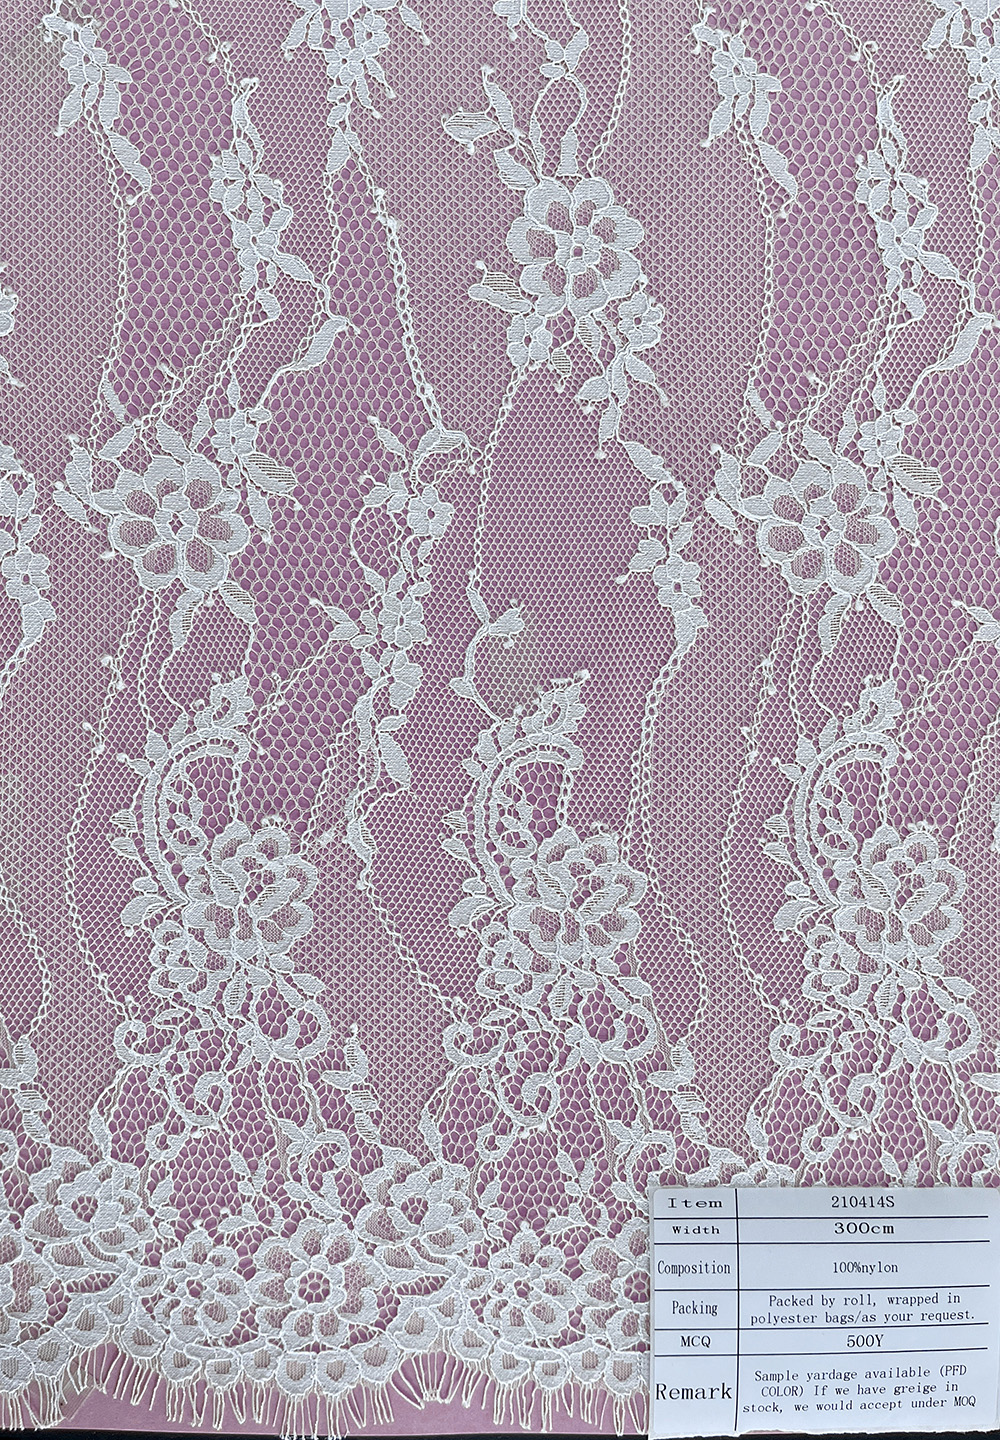 Lizhiying exquisite craft wedding lace fabric